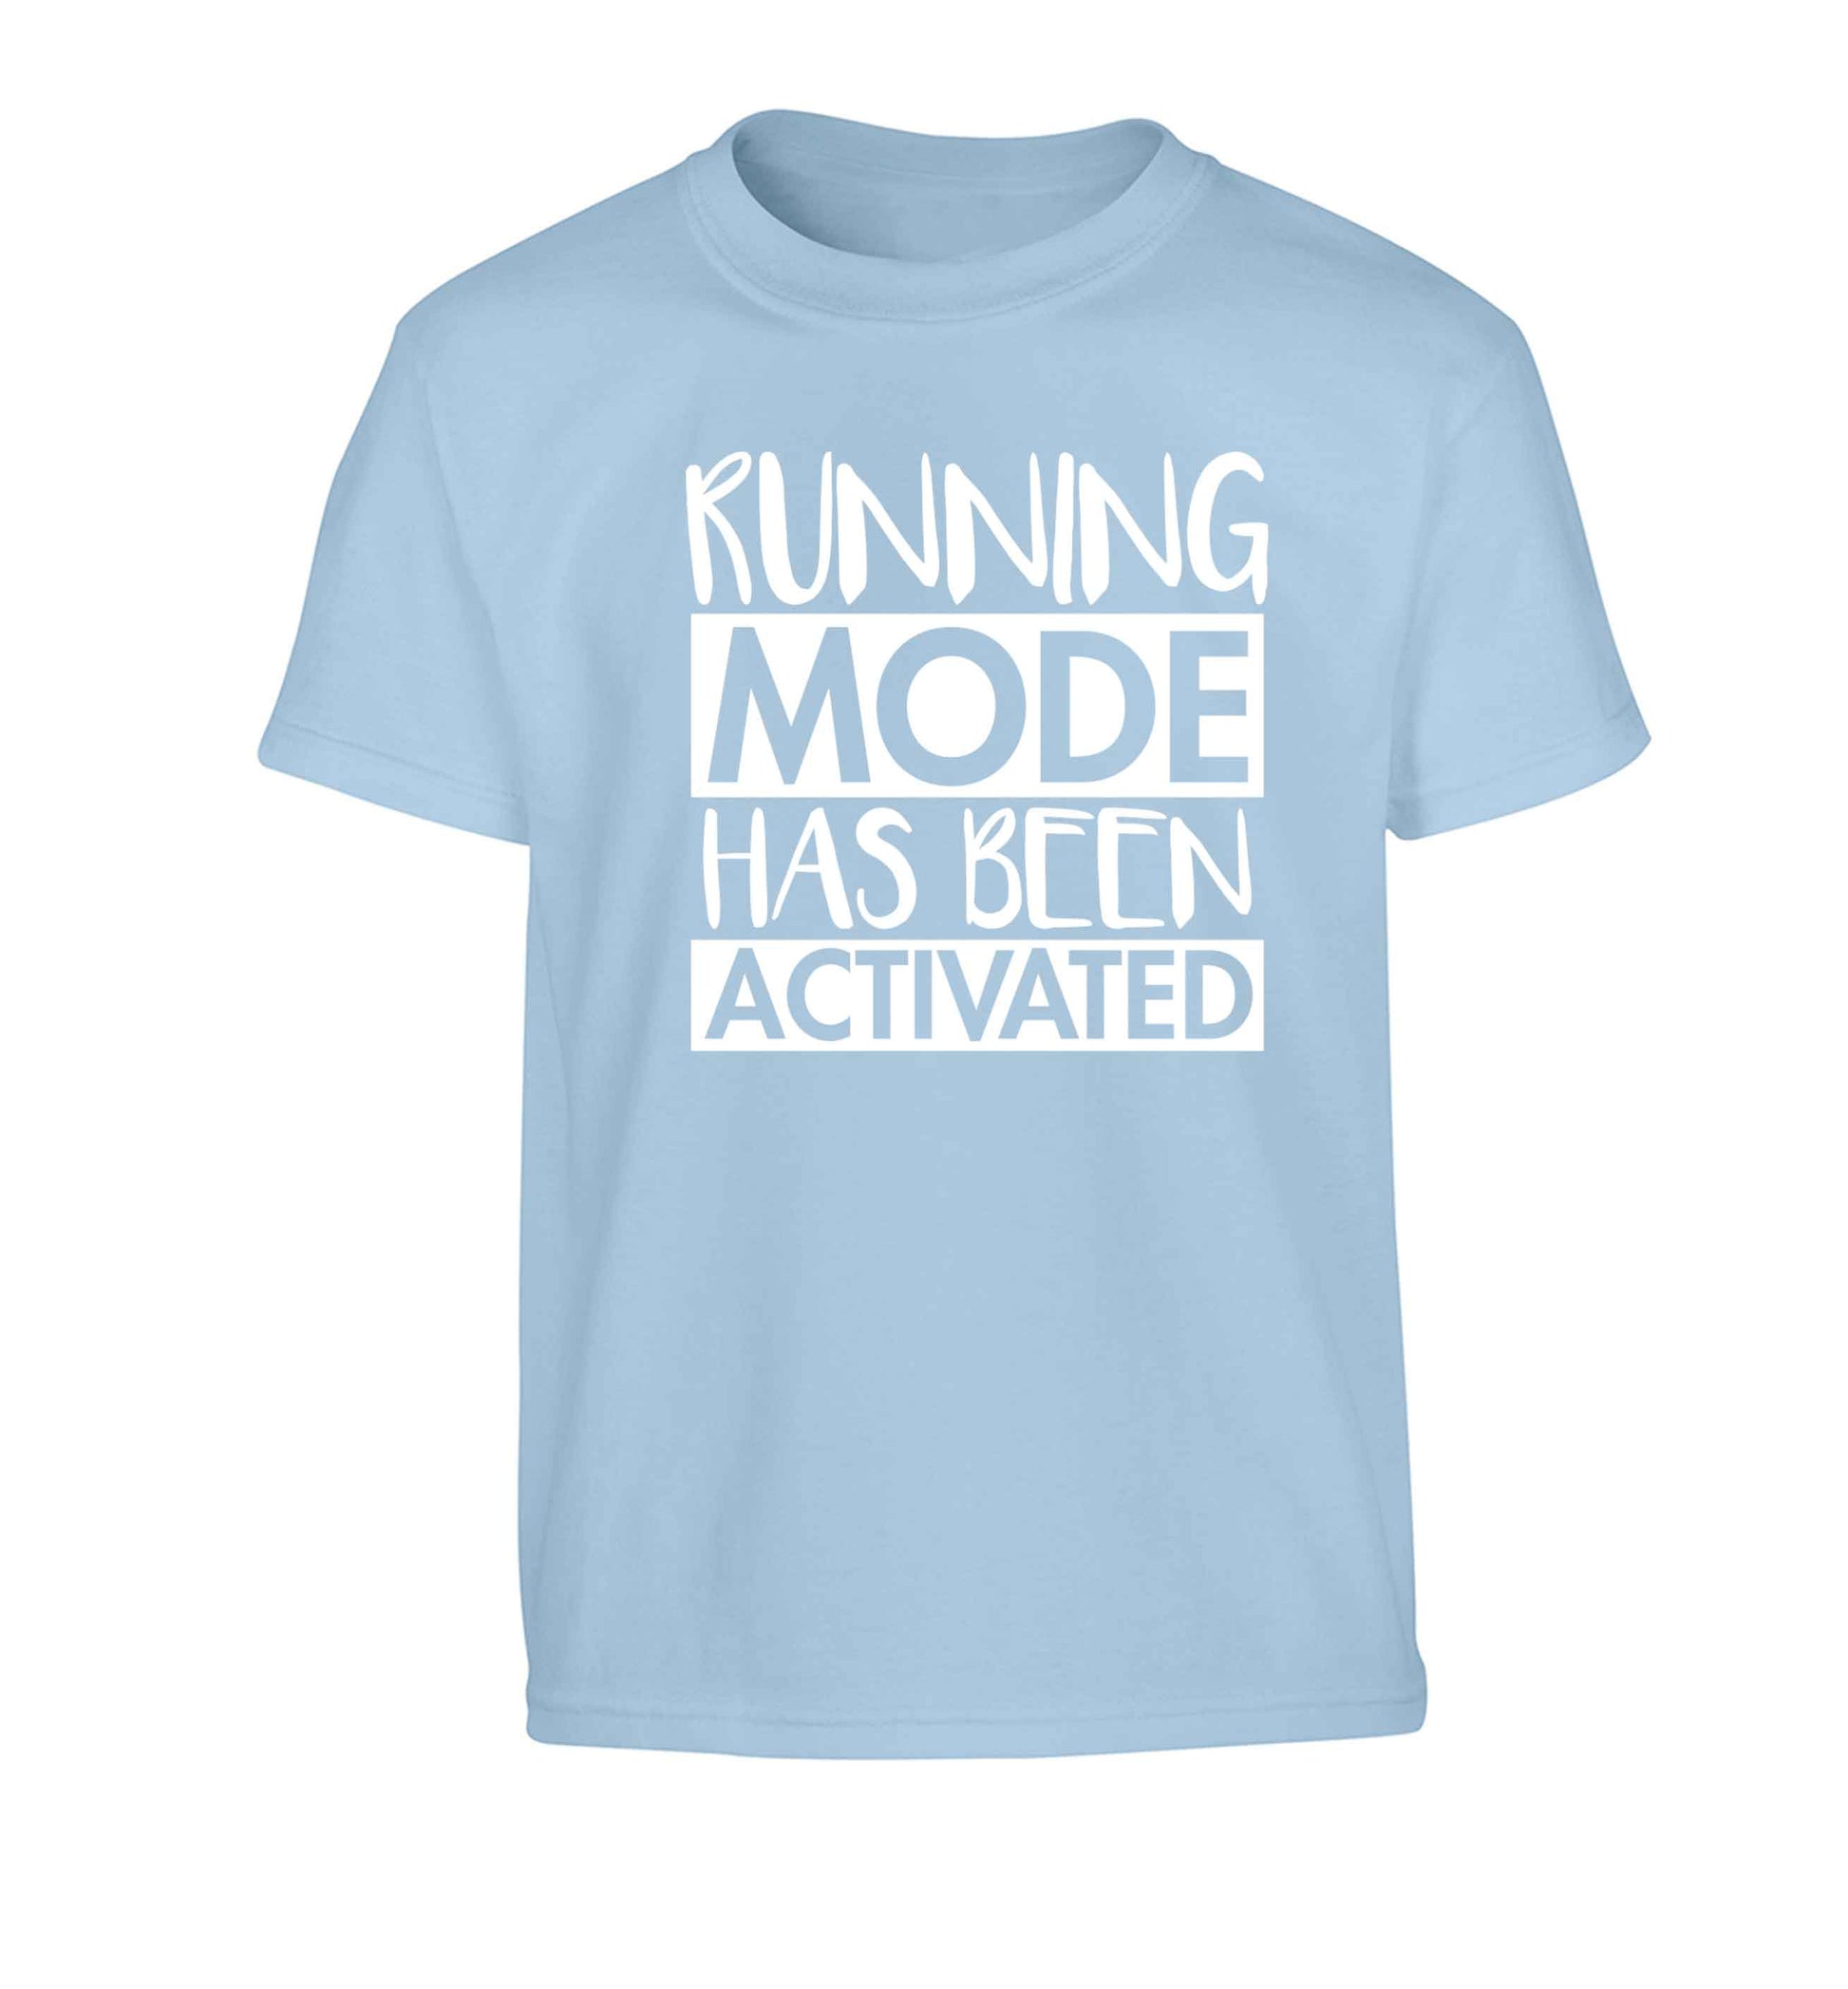 Running mode has been activated Children's light blue Tshirt 12-13 Years